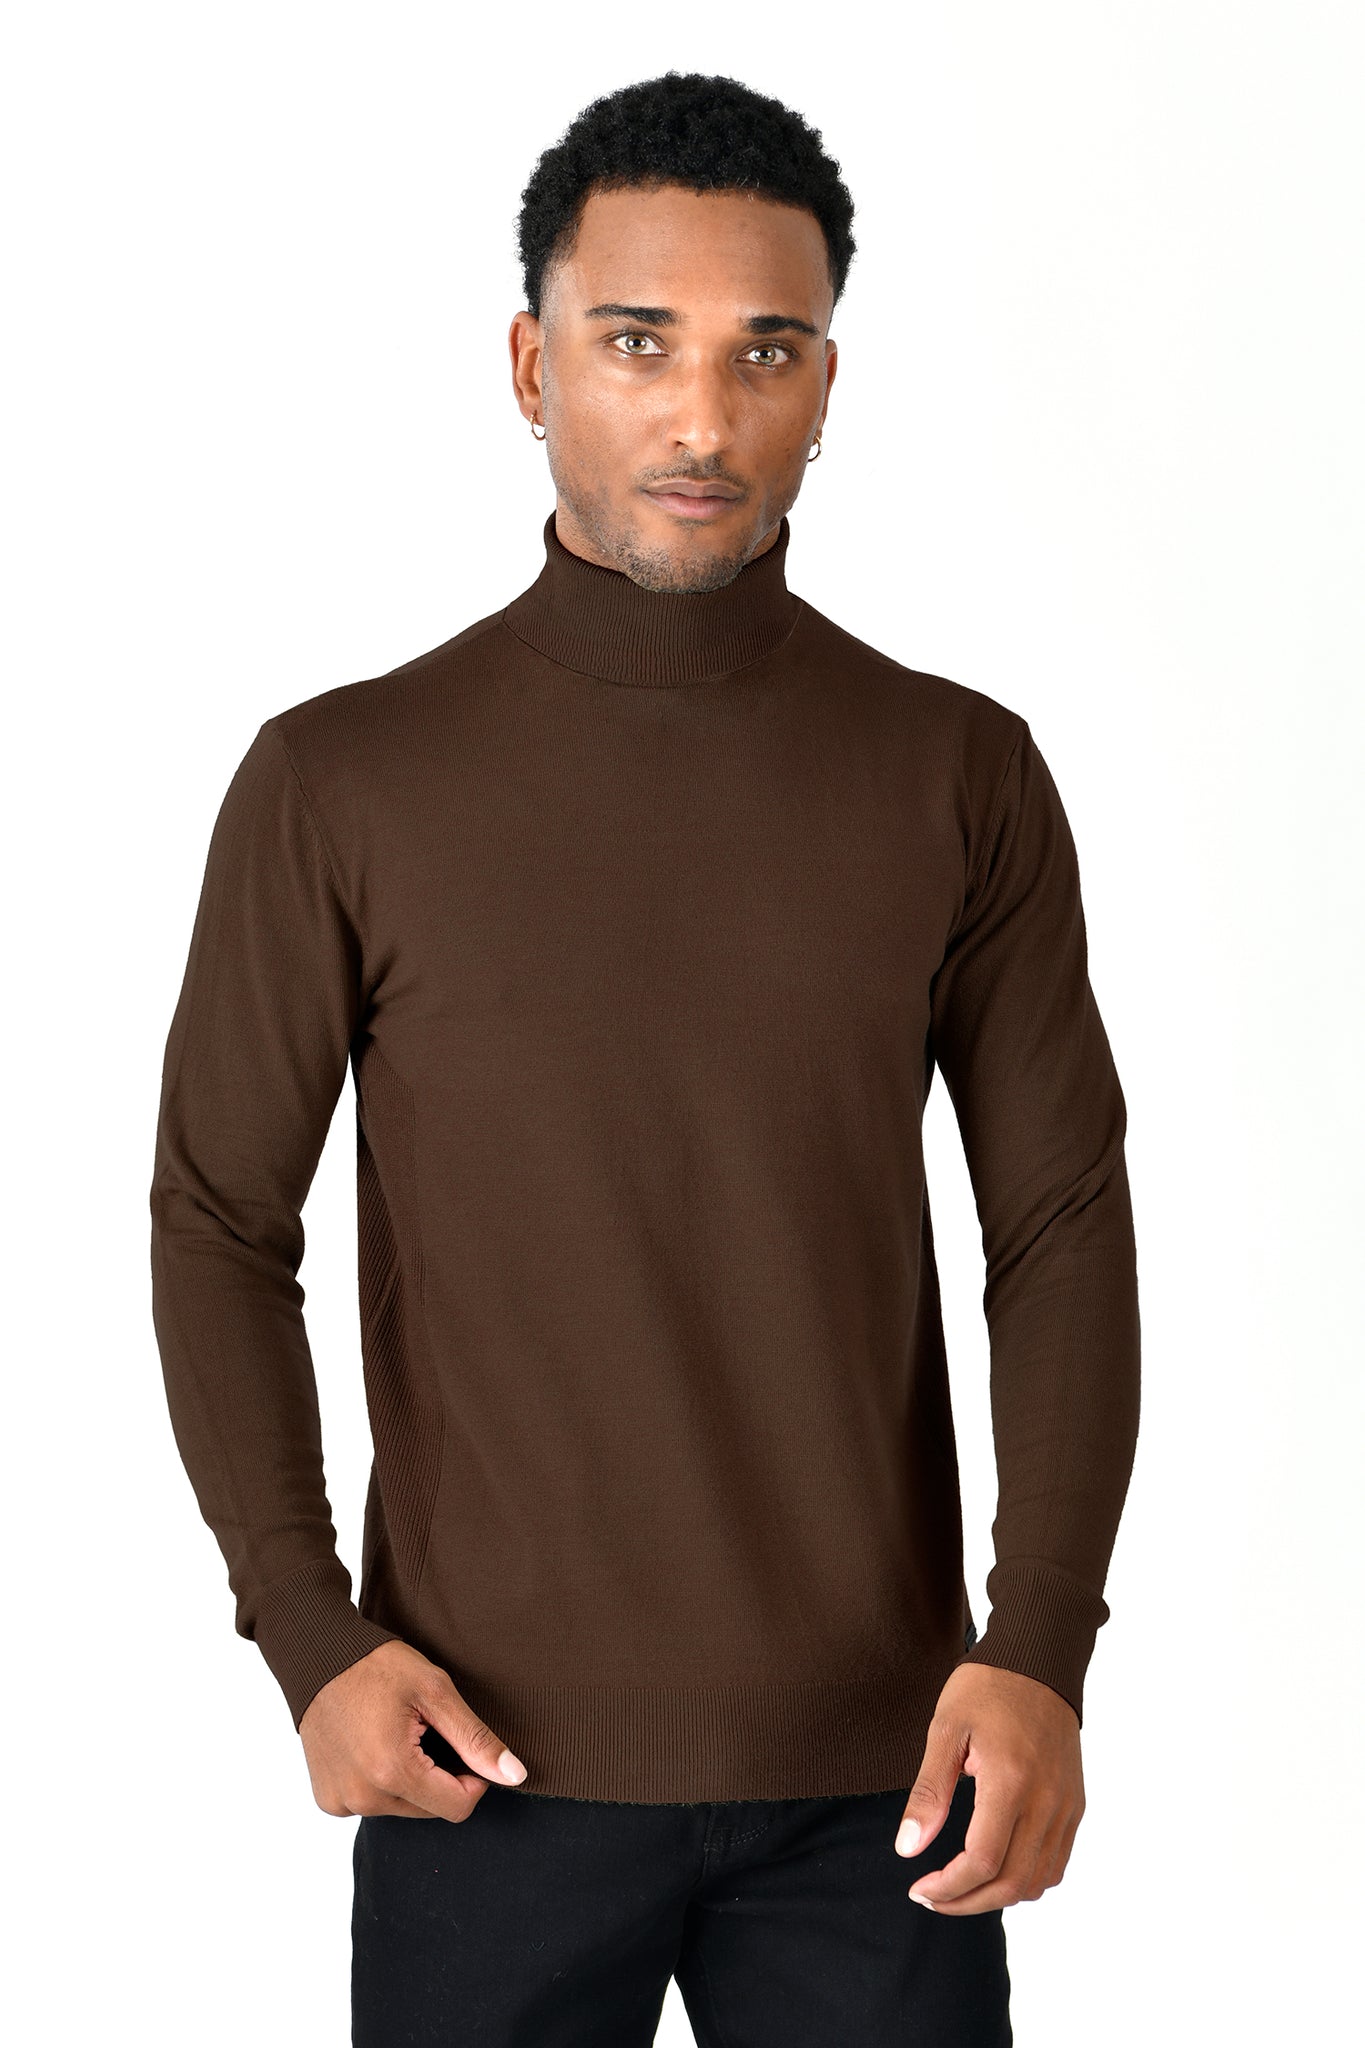 Men's Turtleneck Ribbed Solid Color Basic Sweater LS2100 Charcoal